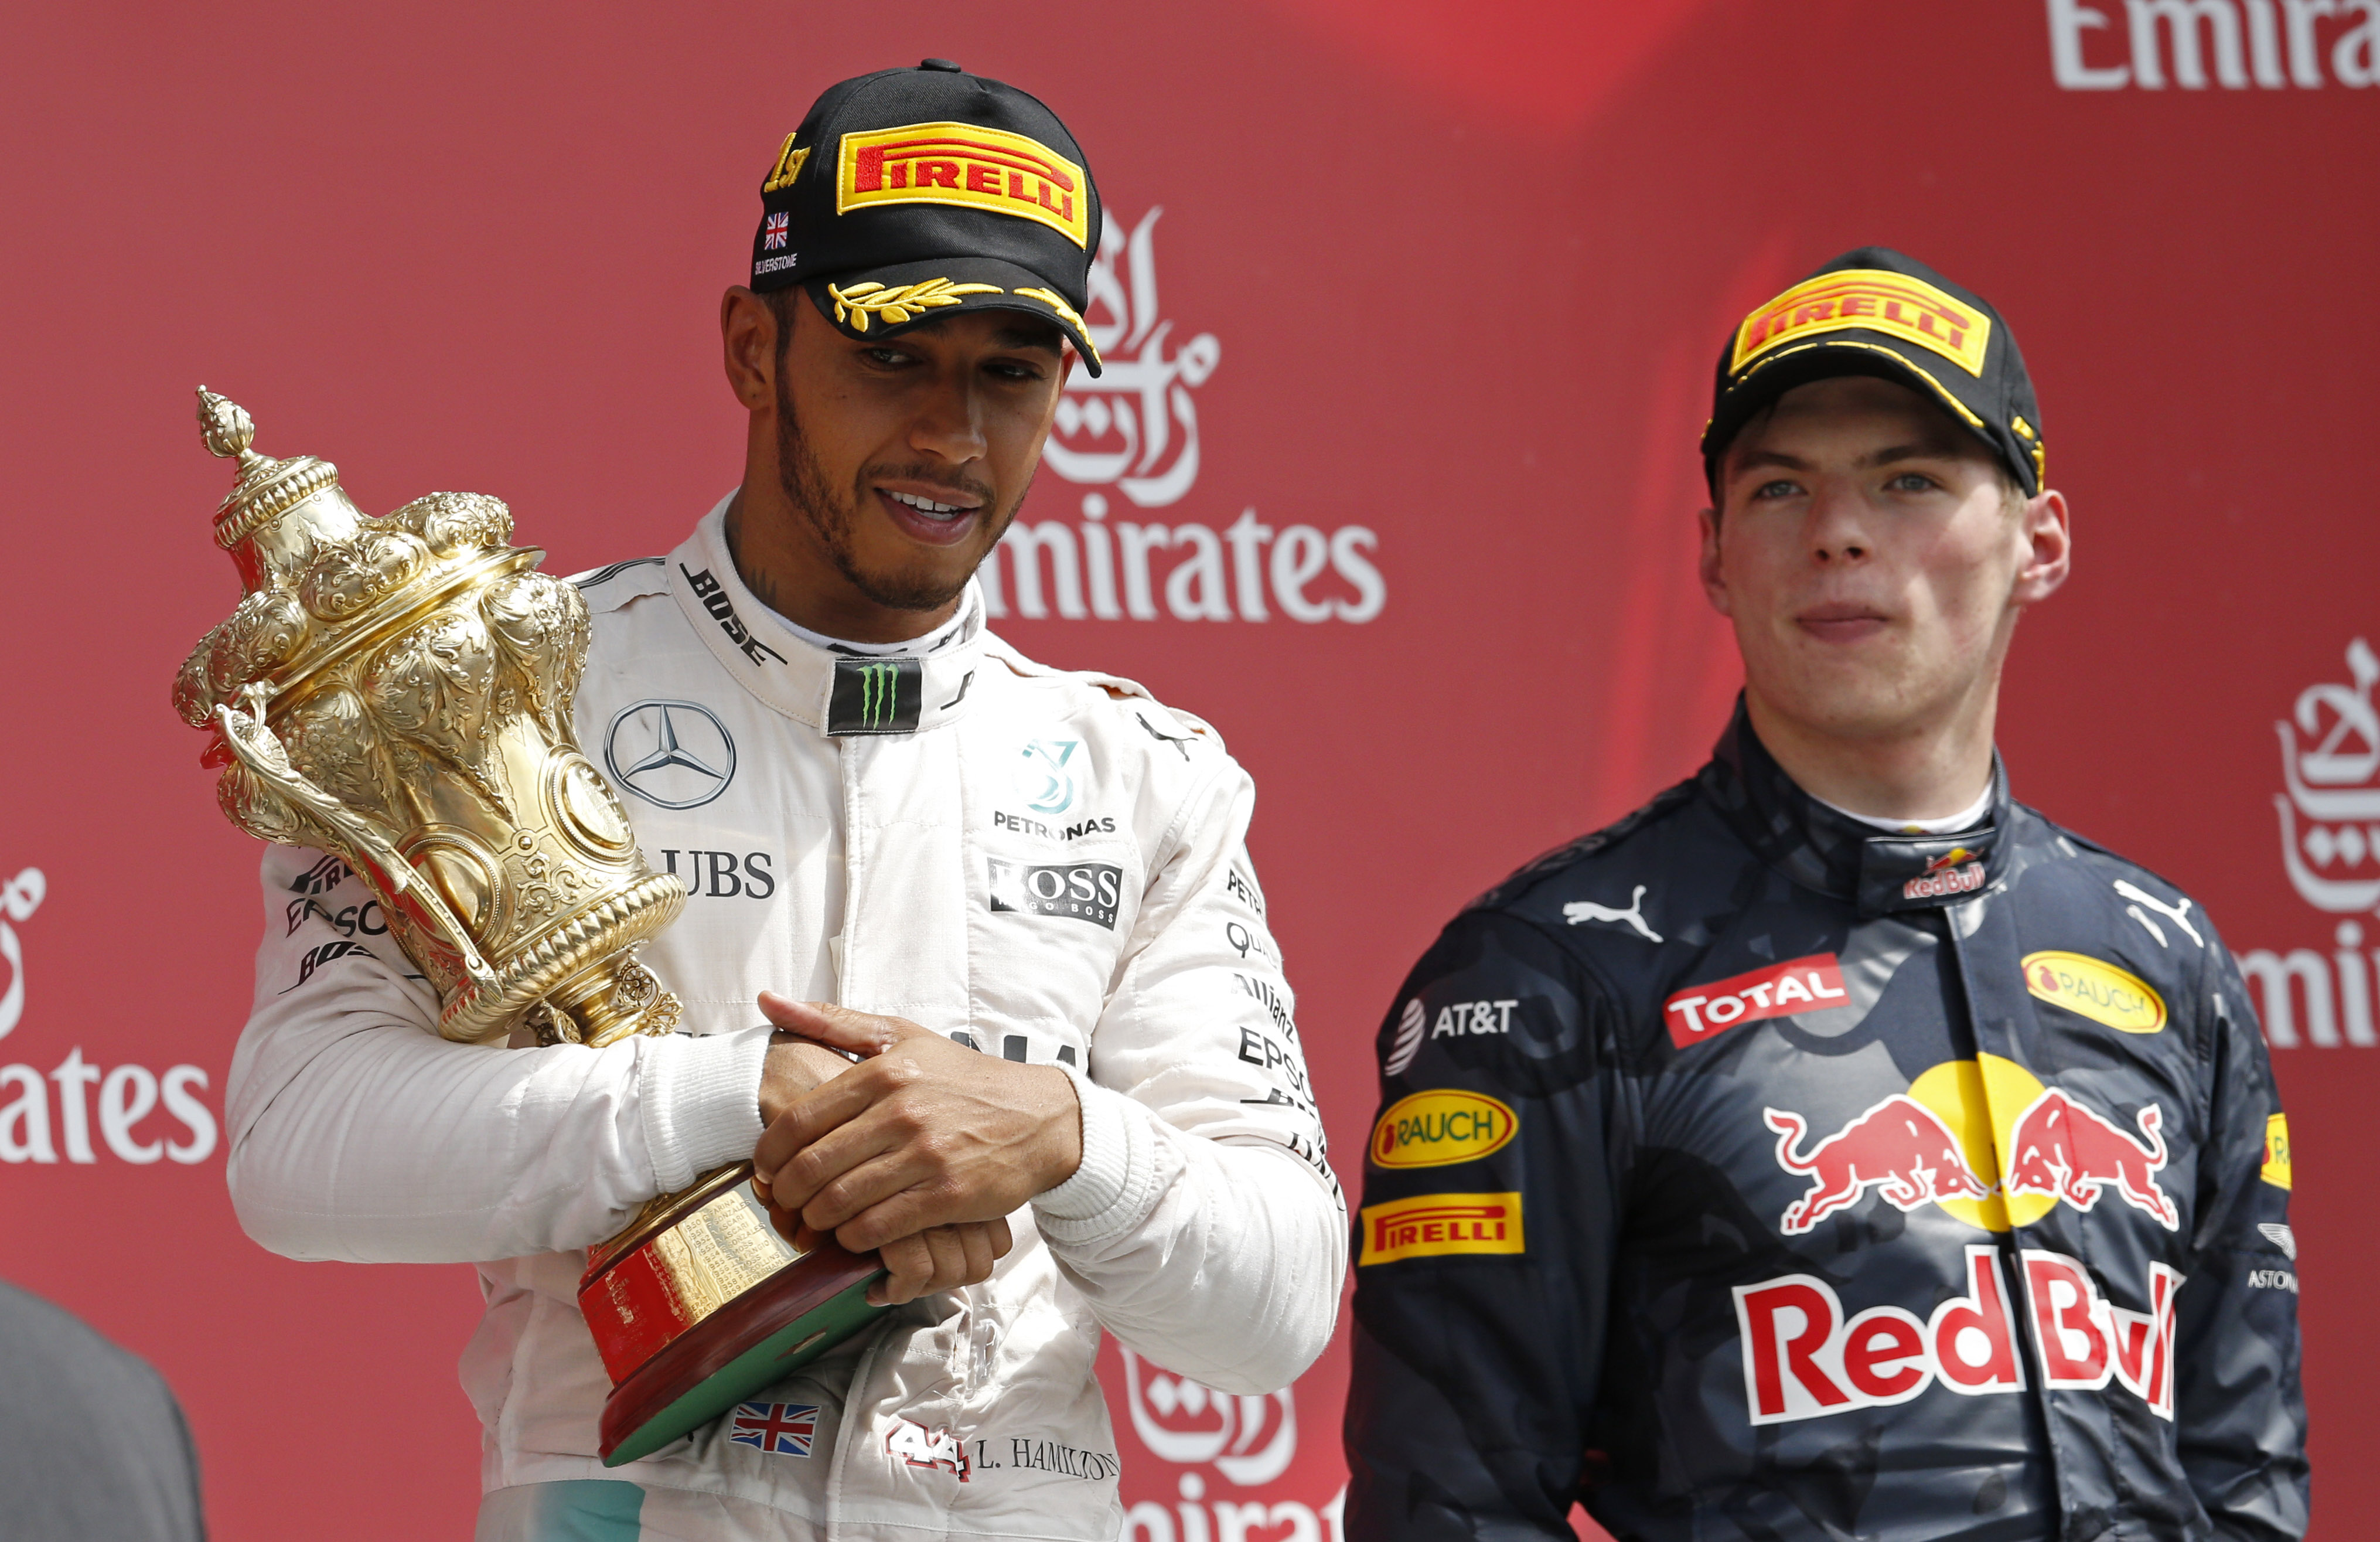 Motor racing: Hamilton wins British Grand Prix from pole